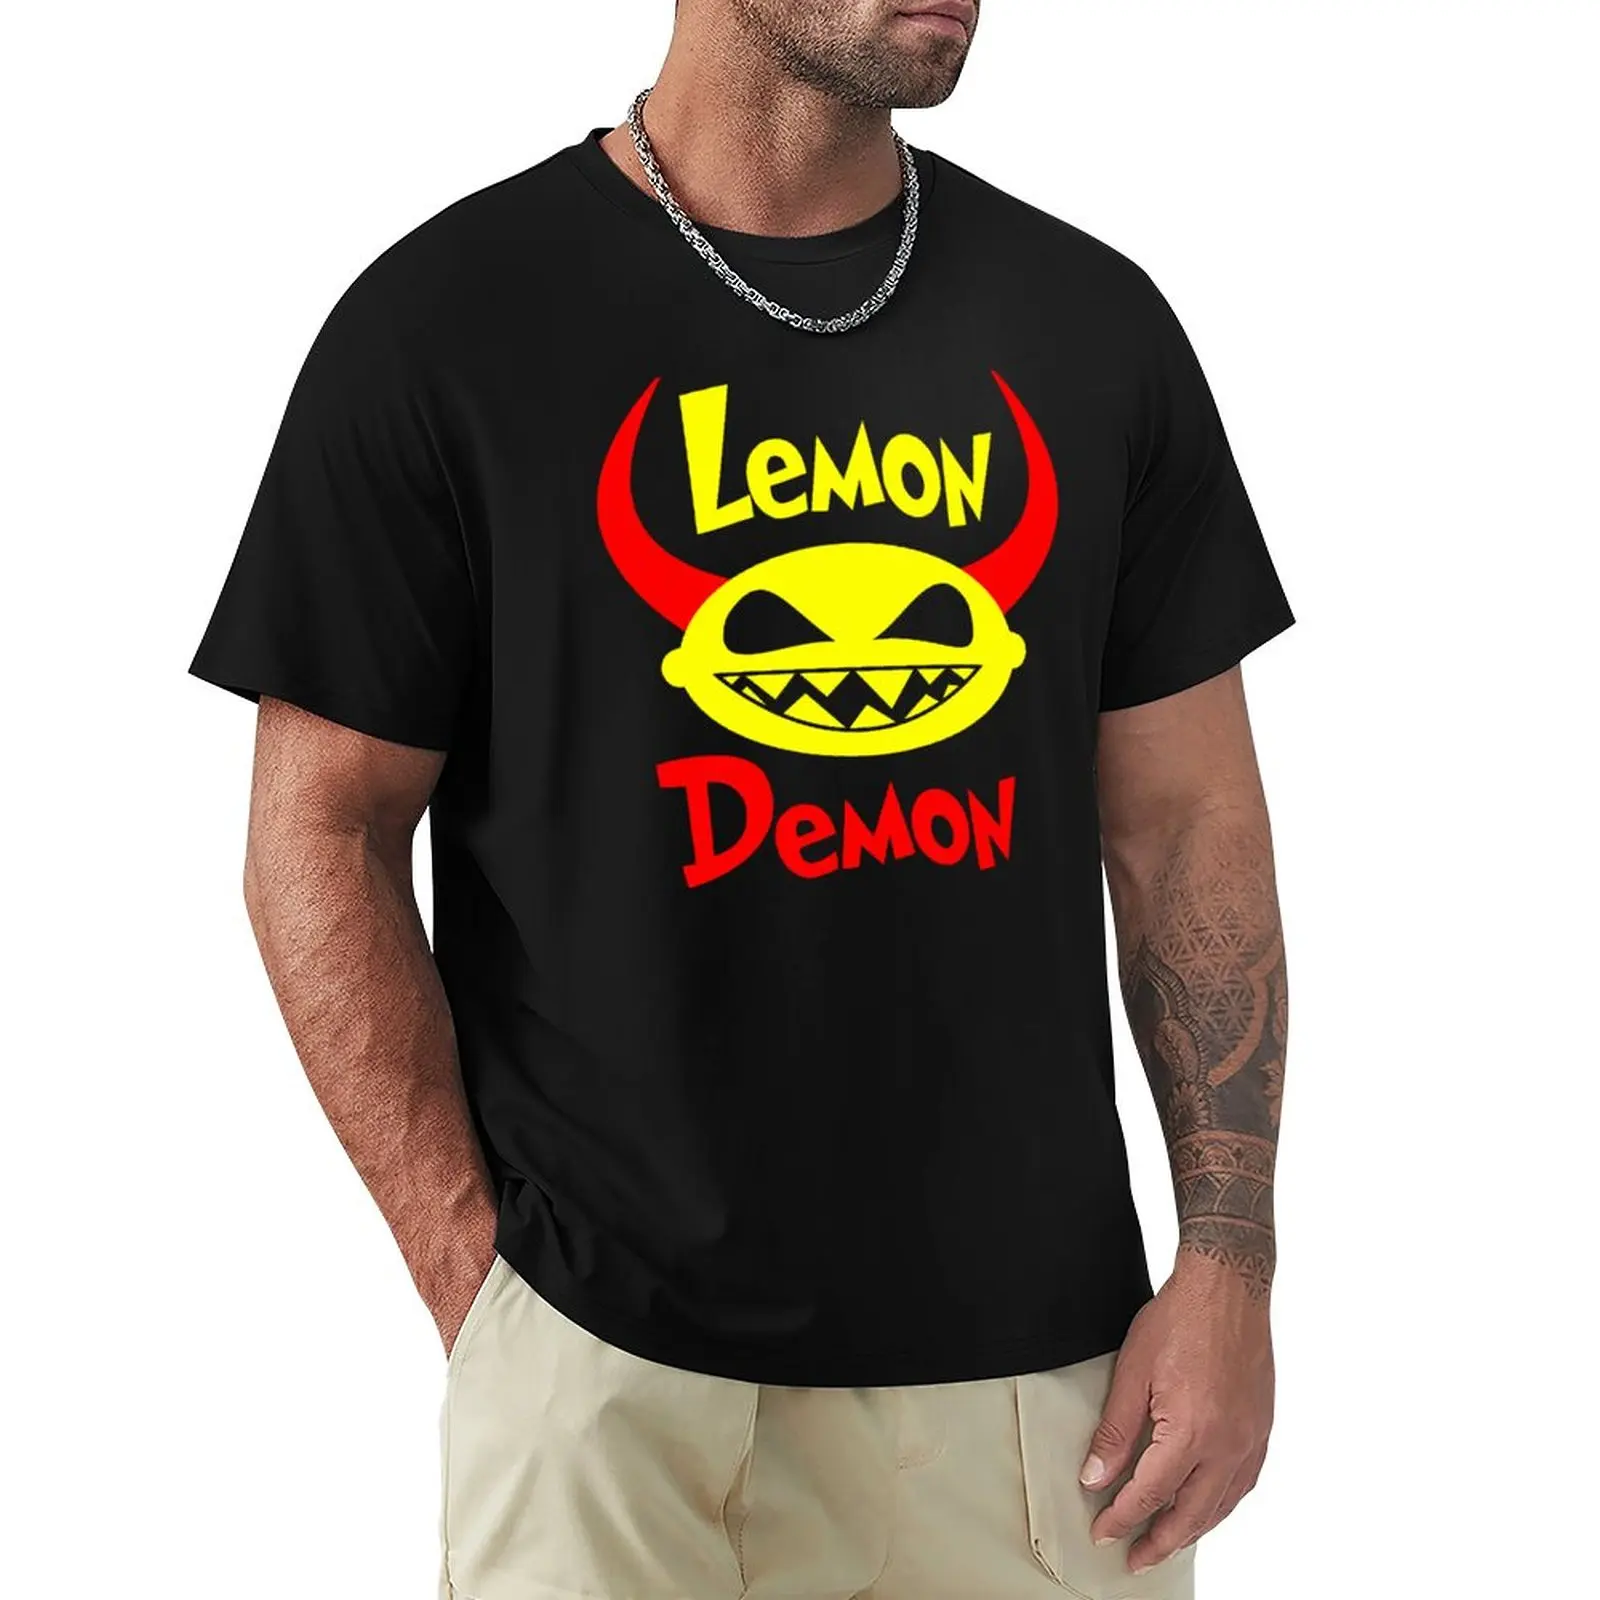 

Lemon-Demon-Merch T-Shirt Sweat Shirts Shirts Graphic Tees Graphic T Shirts Plain T Shirts Men